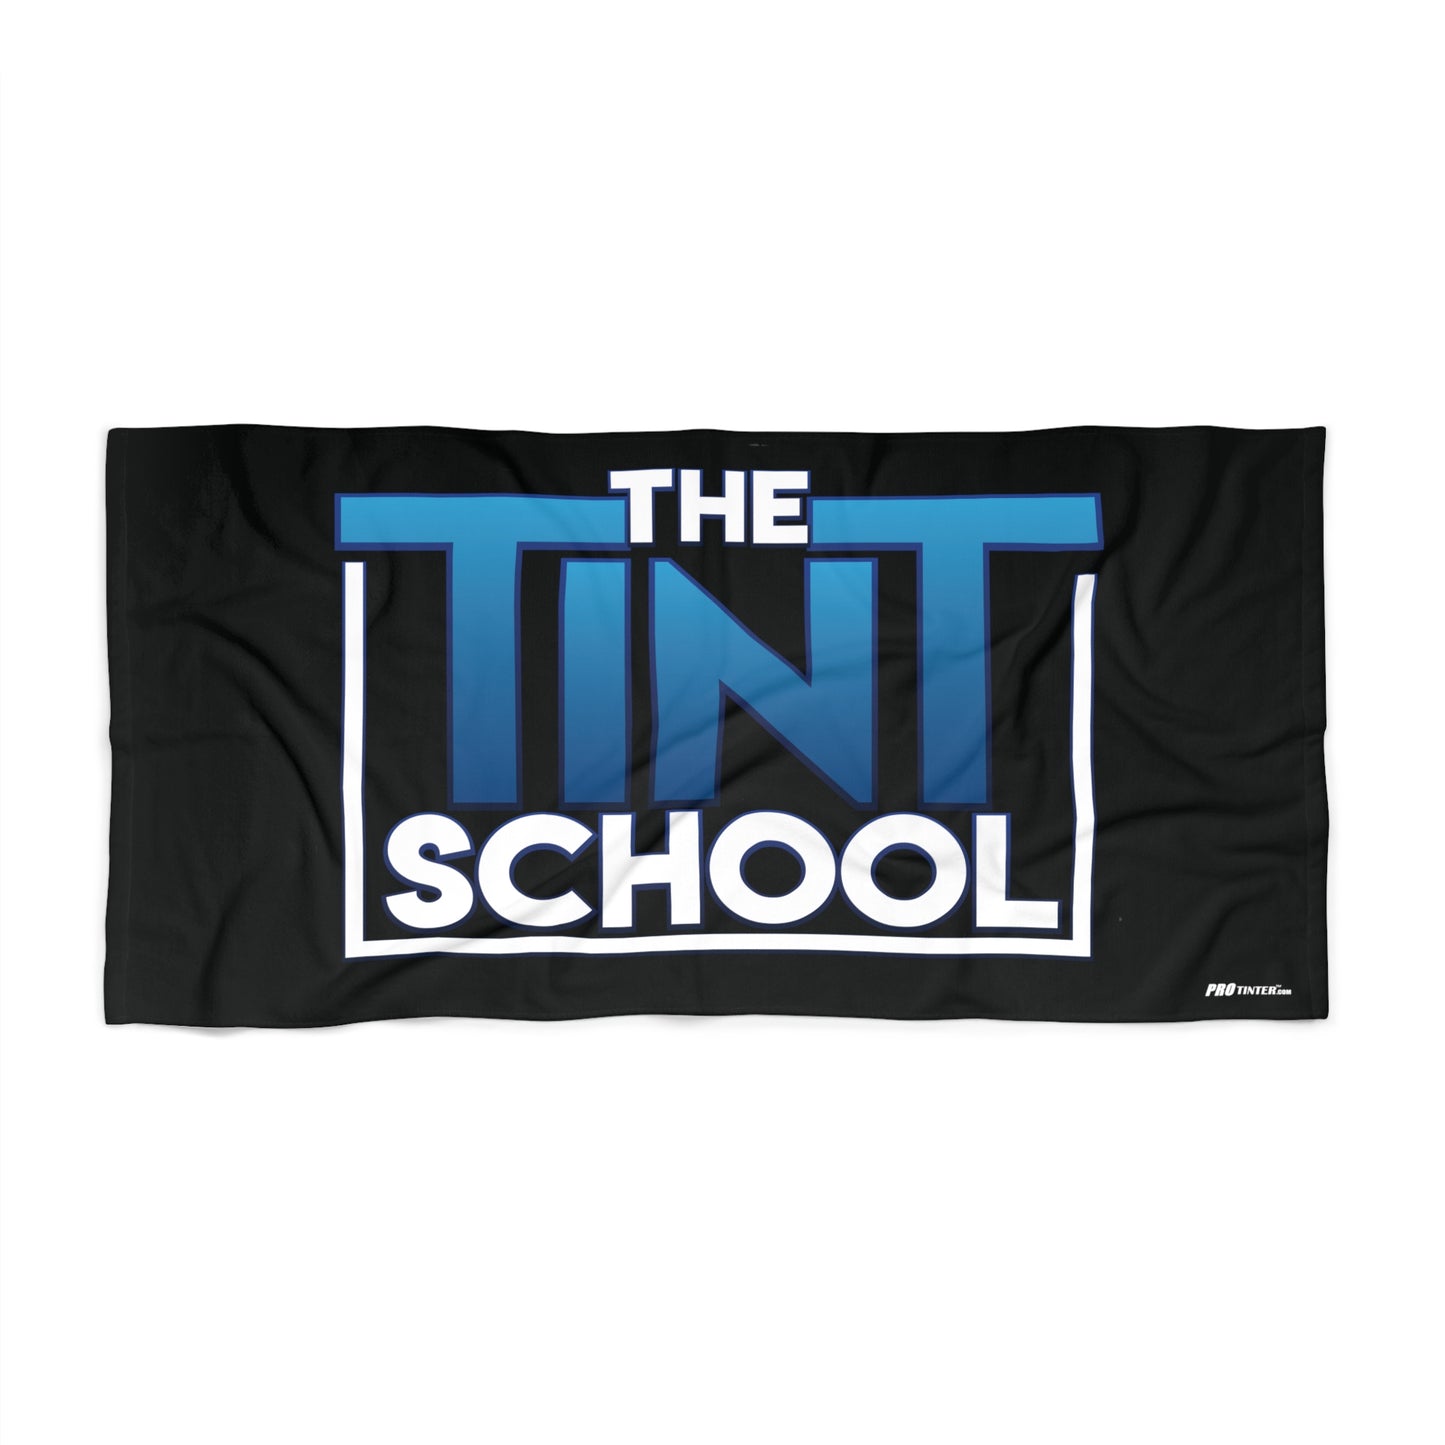 The Tint School Dash Towel